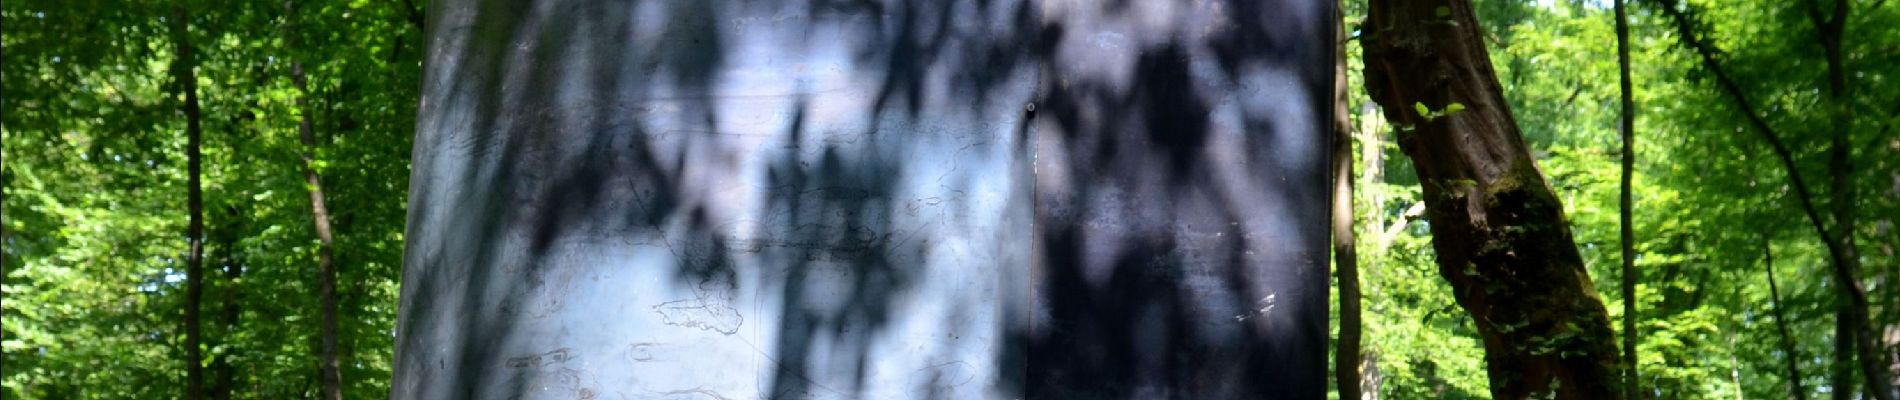 POI Havelange - Unnamed POI - Photo